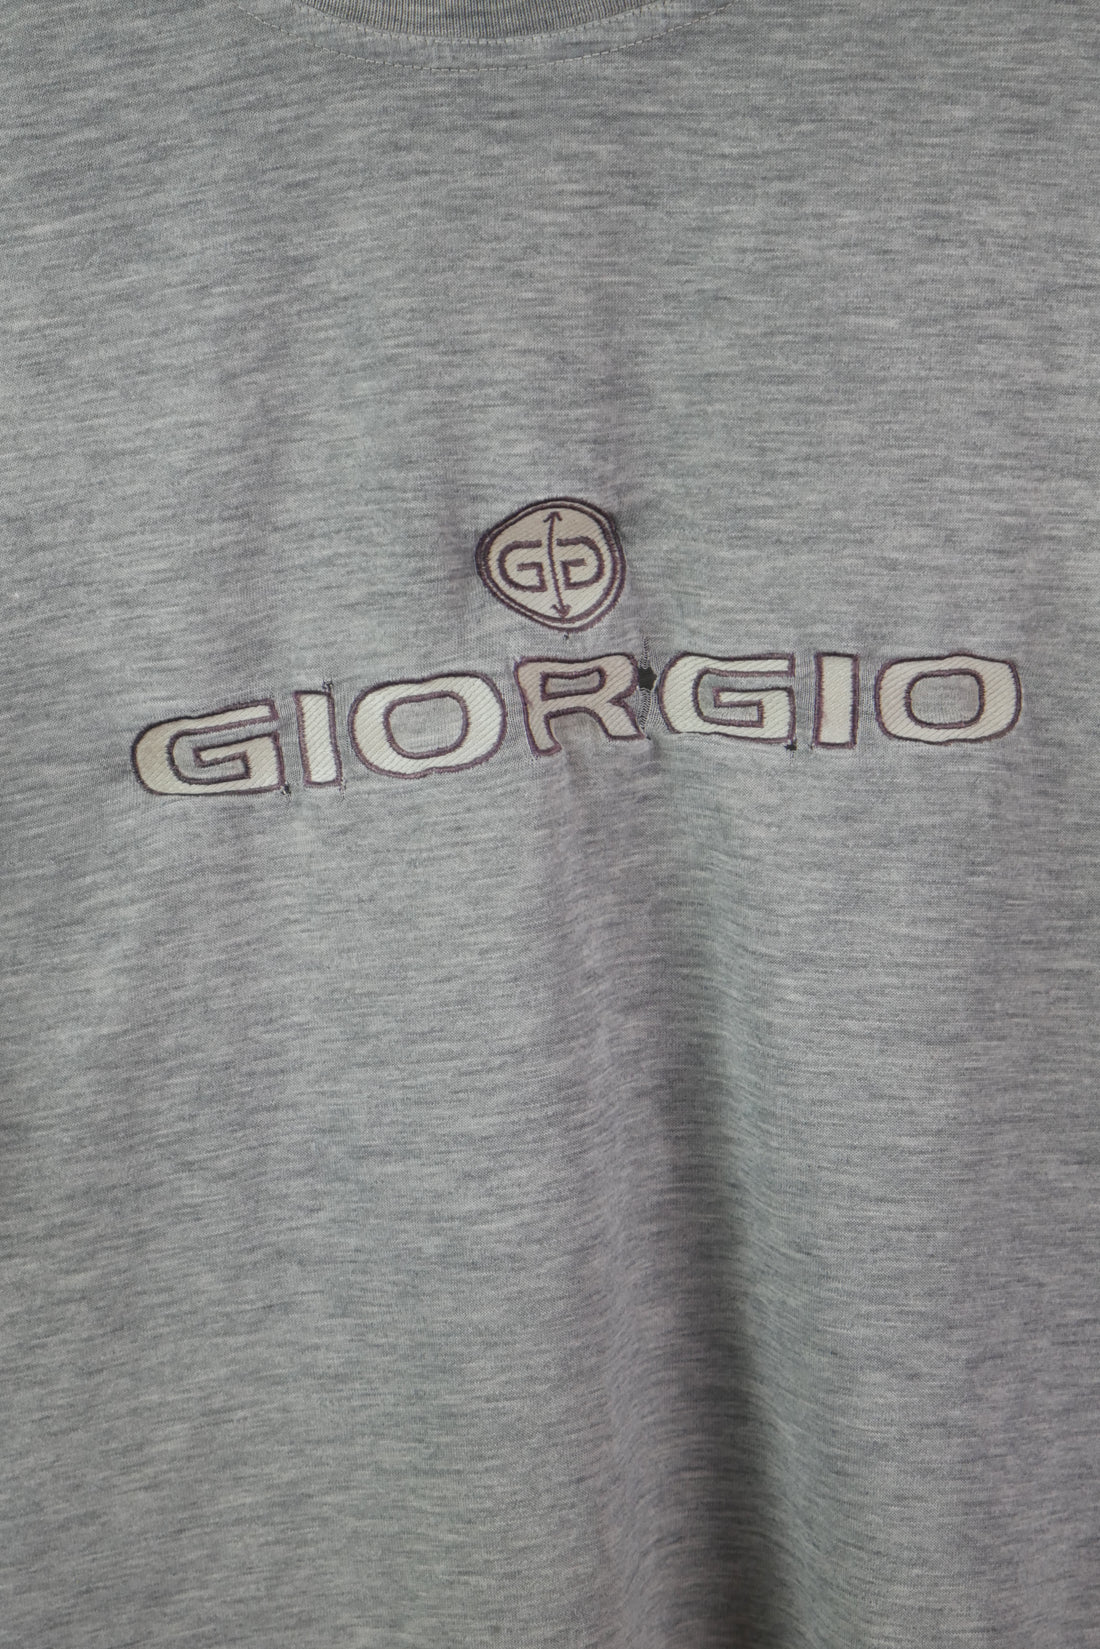 The Giorgio Embroidered T-Shirt (L)